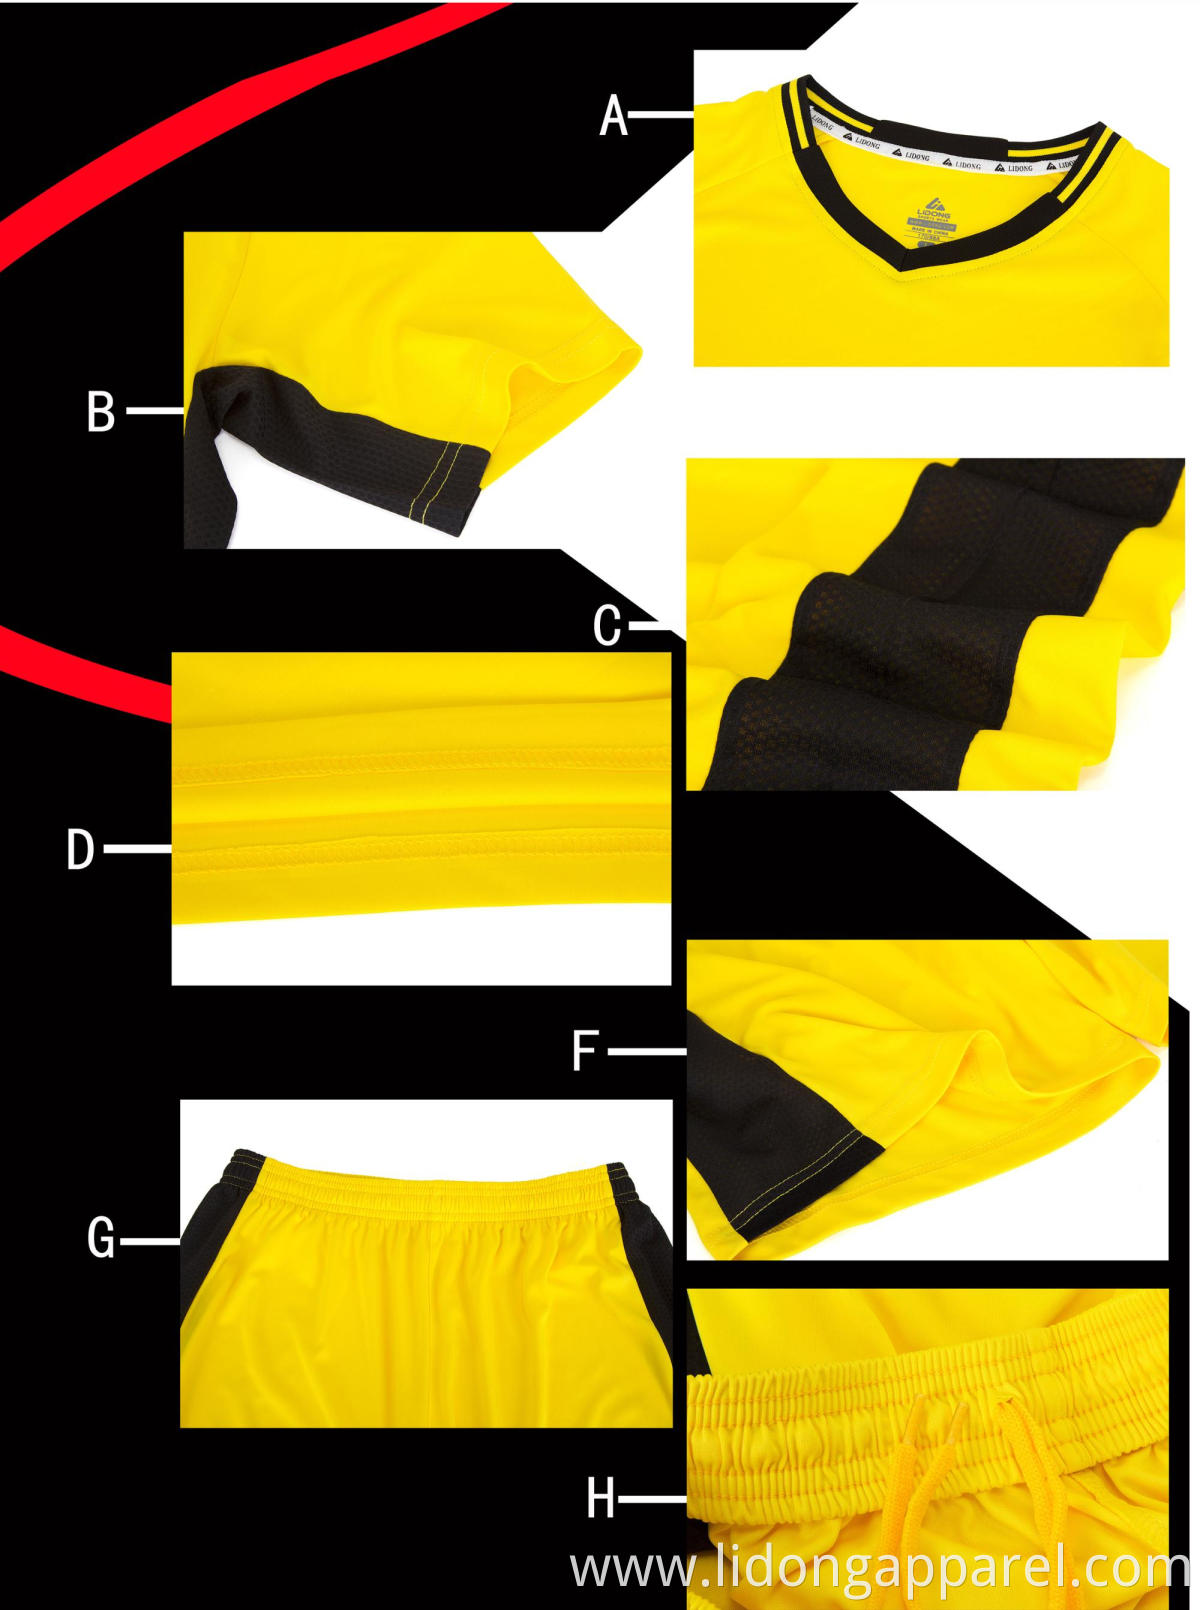 2021 Oem Team Soccer Uniform Soccer Training Suit High Quality Football Jerseys